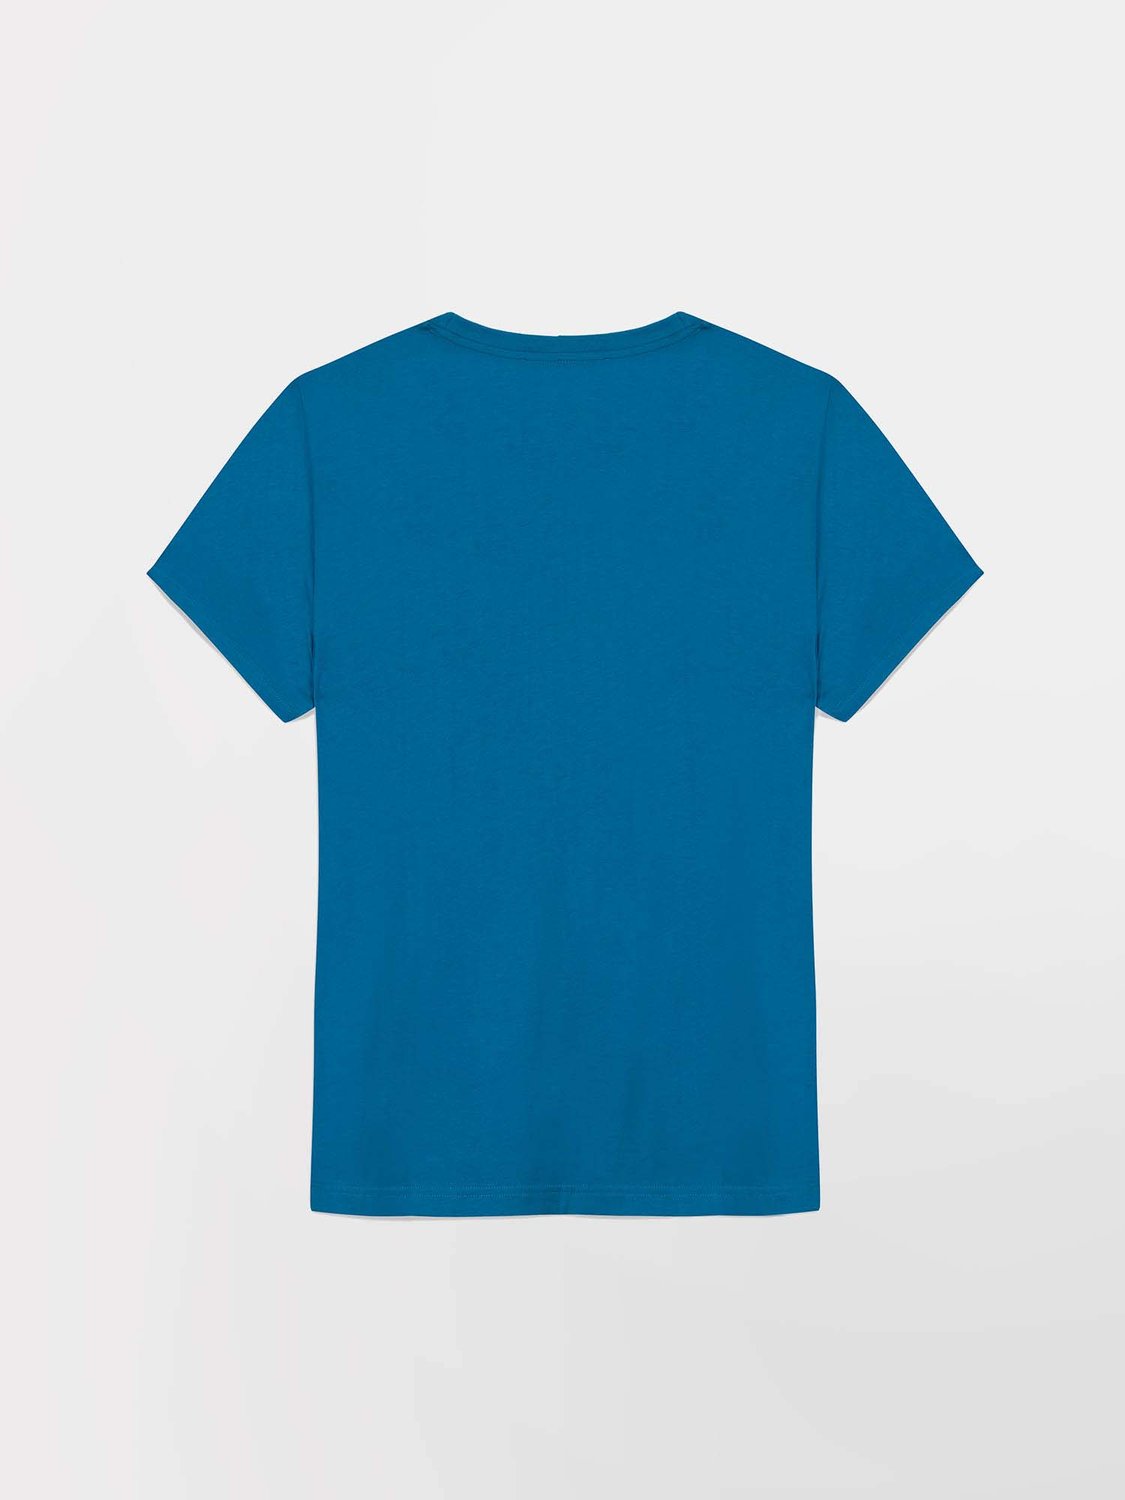 Tee Shirt Homme Coton Biologique Bleu